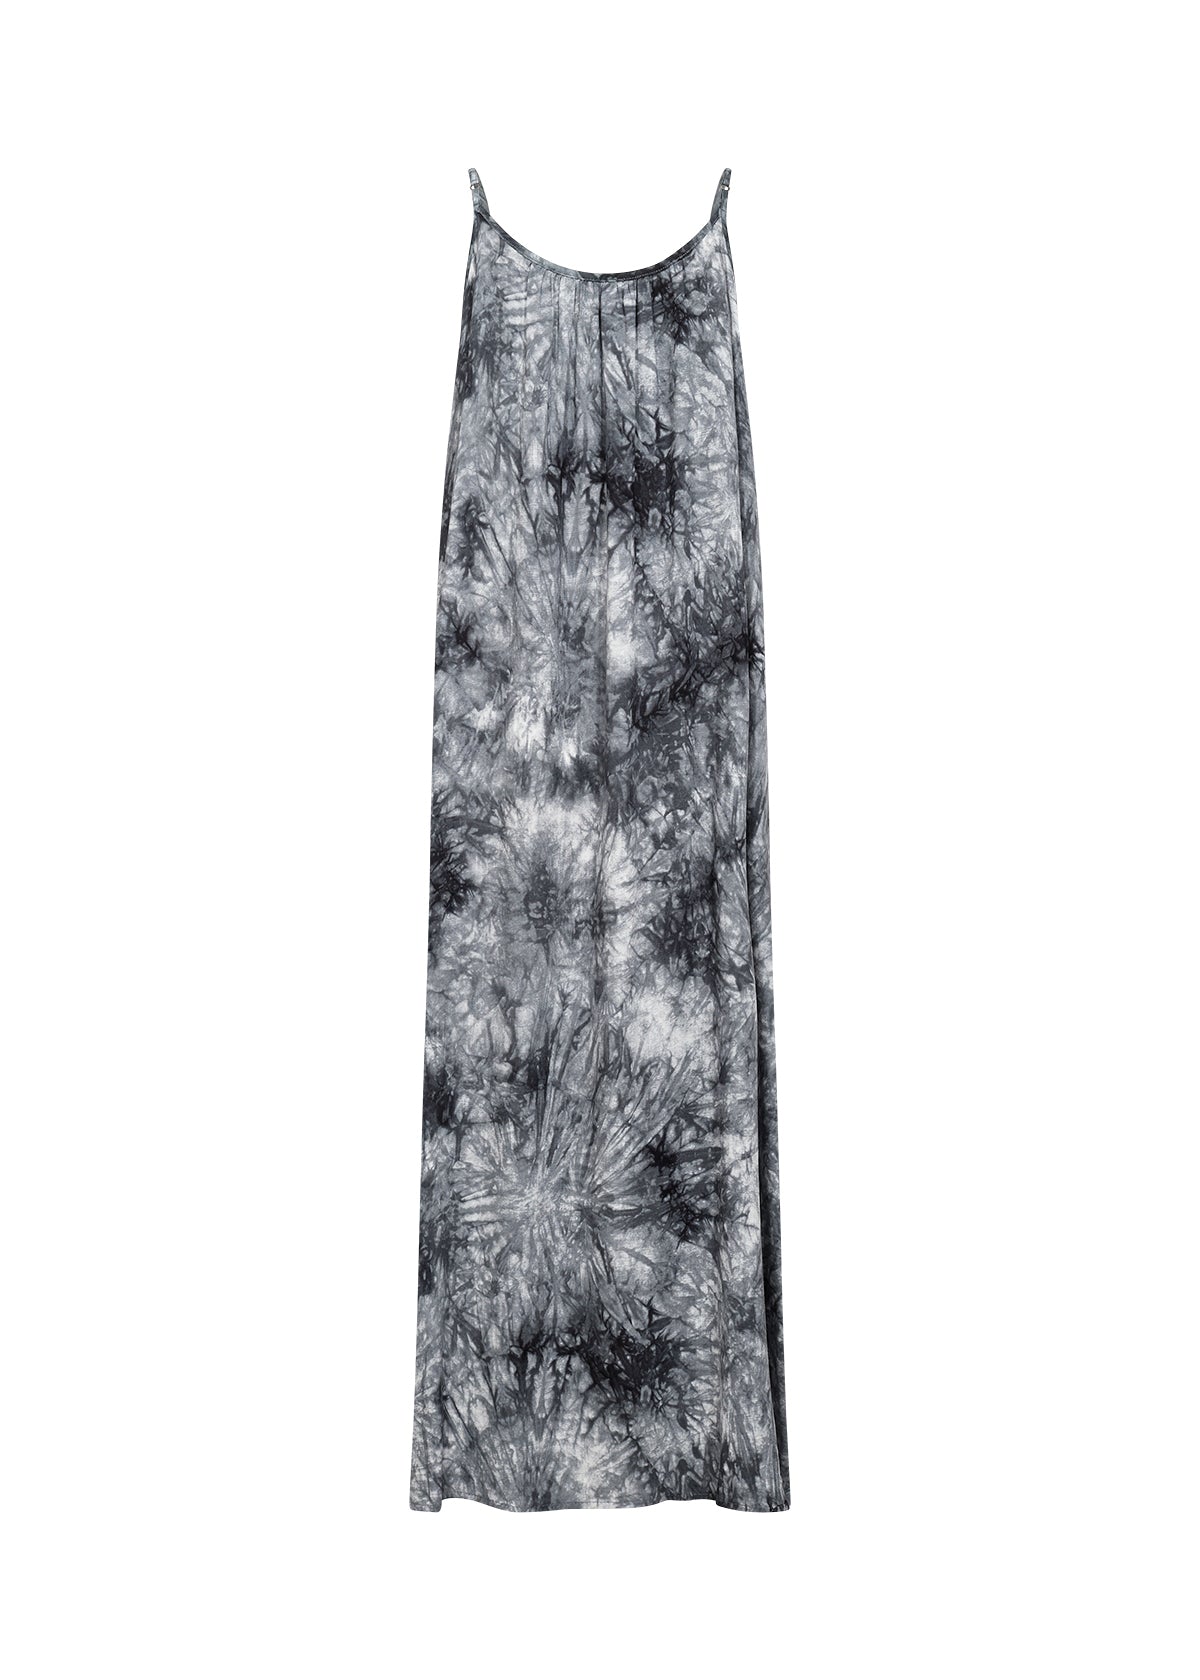 Soyaconcept - Lela 3 Dress / Grey Tie Dye